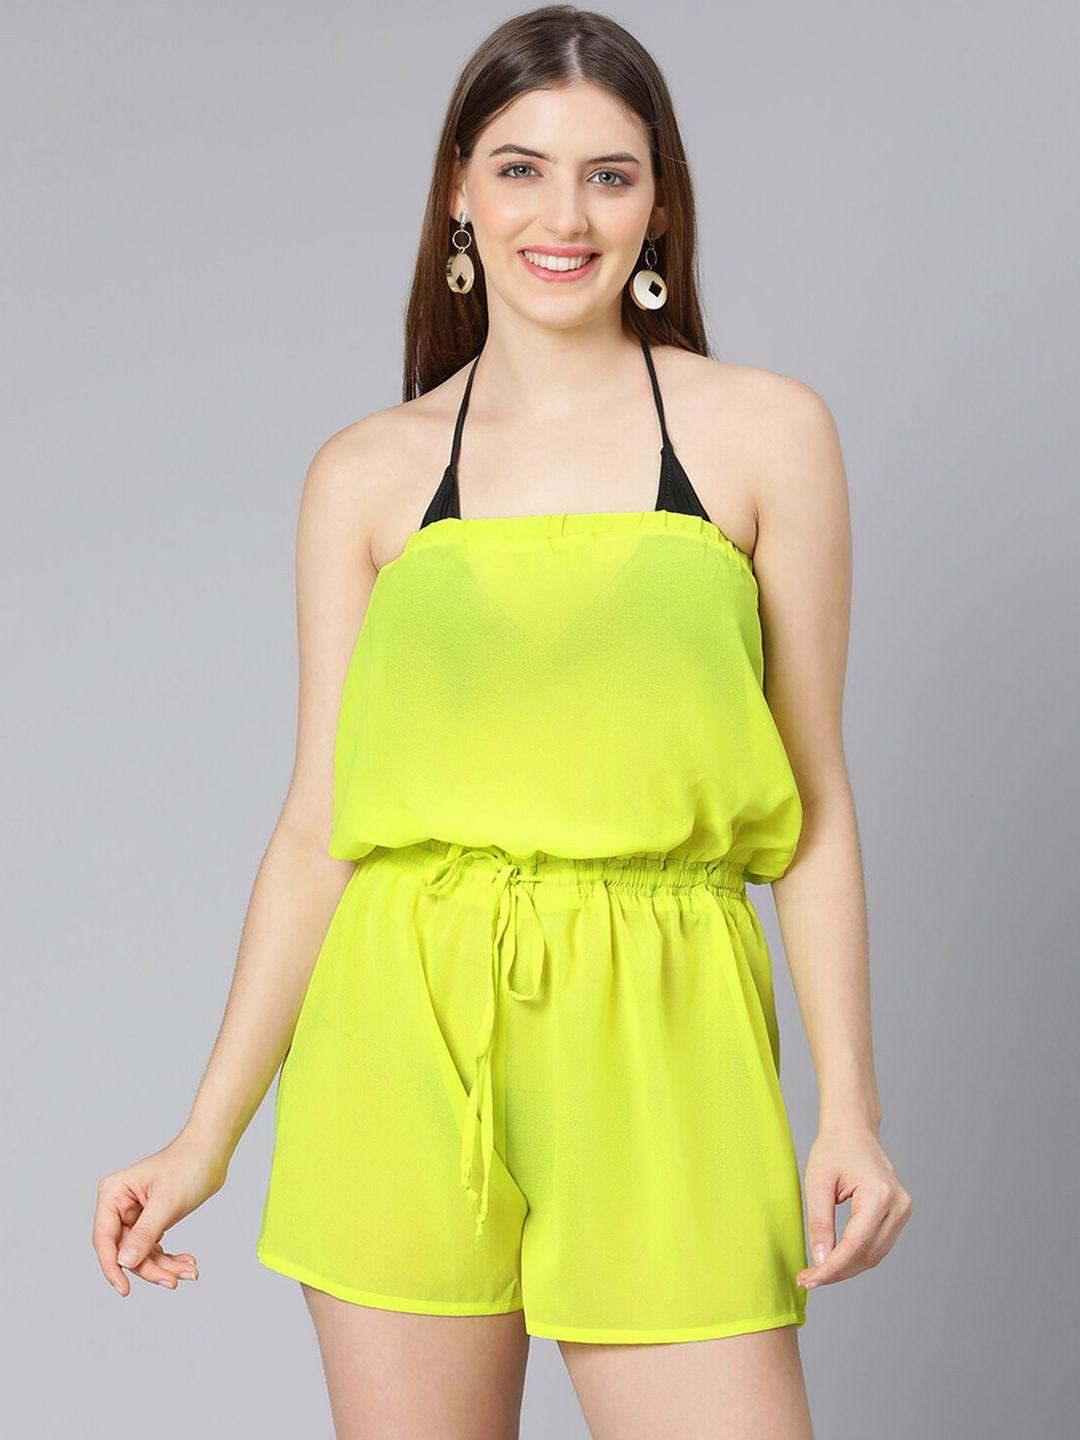 oxolloxo women yellow solid off-shoulder beachwear